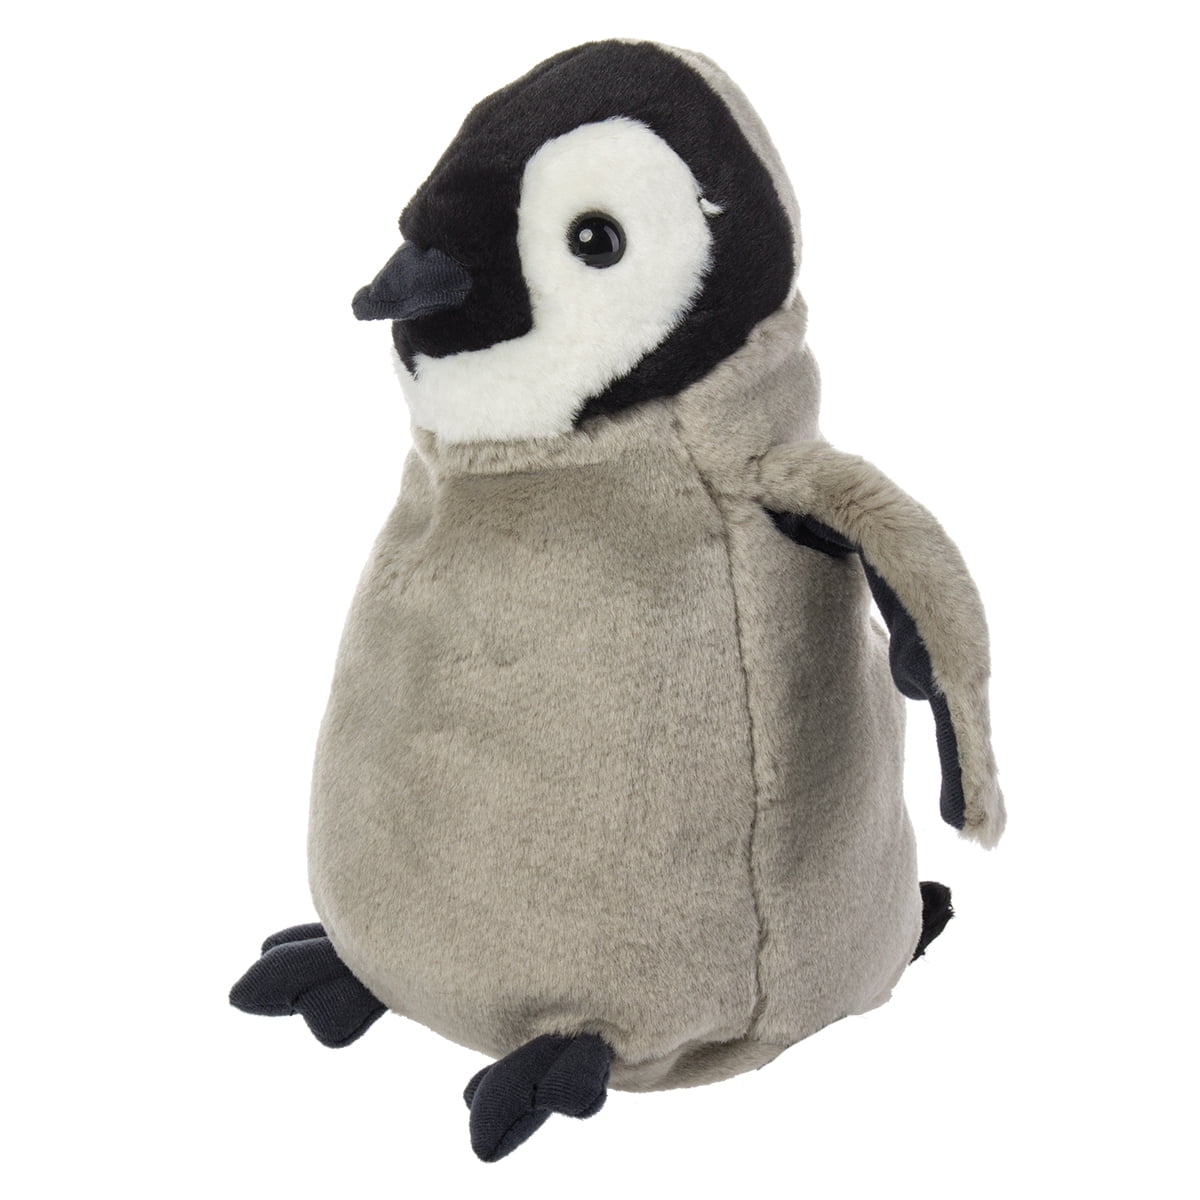 Gifts for Kids Wild Republic Penguin Plush Cuddlekins 12 inches Stuffed Animal Plush Toy